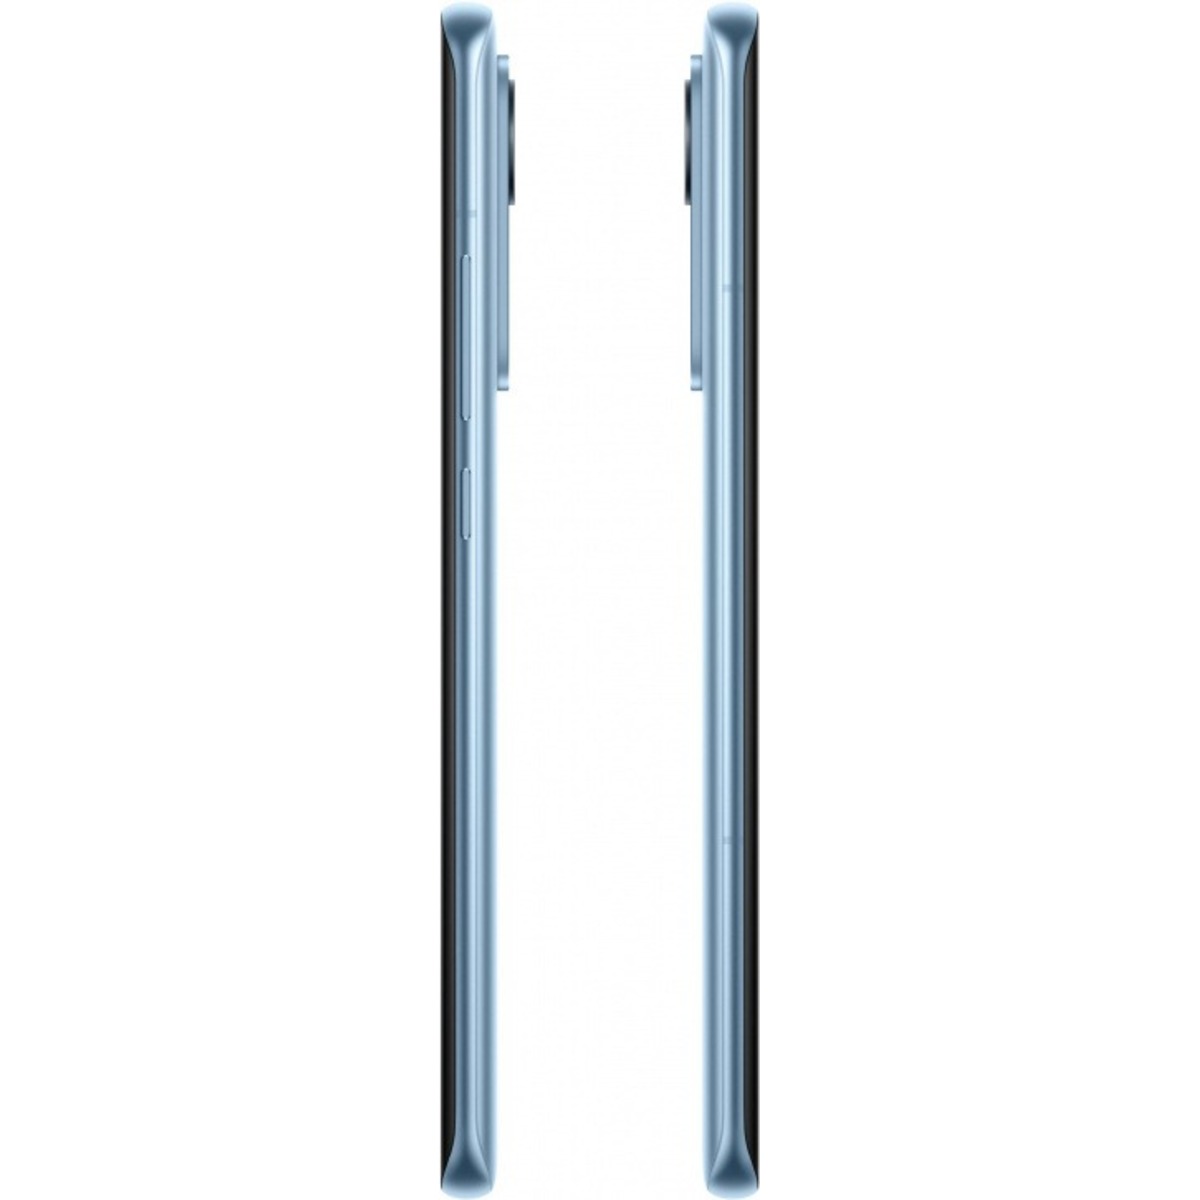 Смартфон Xiaomi 12X 8/128Gb (Цвет: Blue)